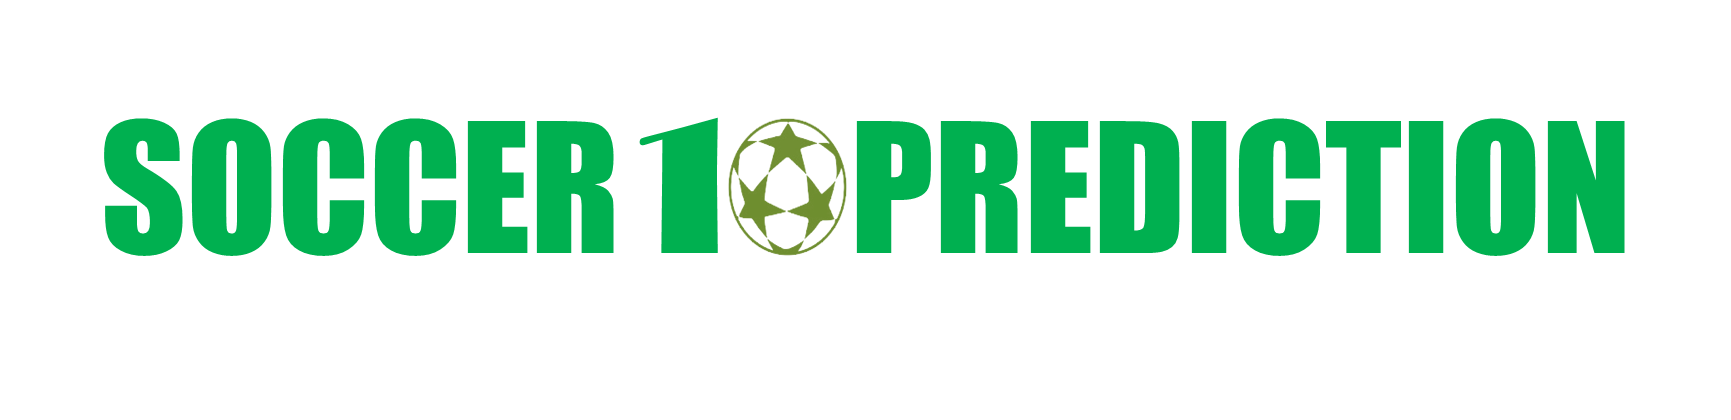 Soccer 10 Predictions